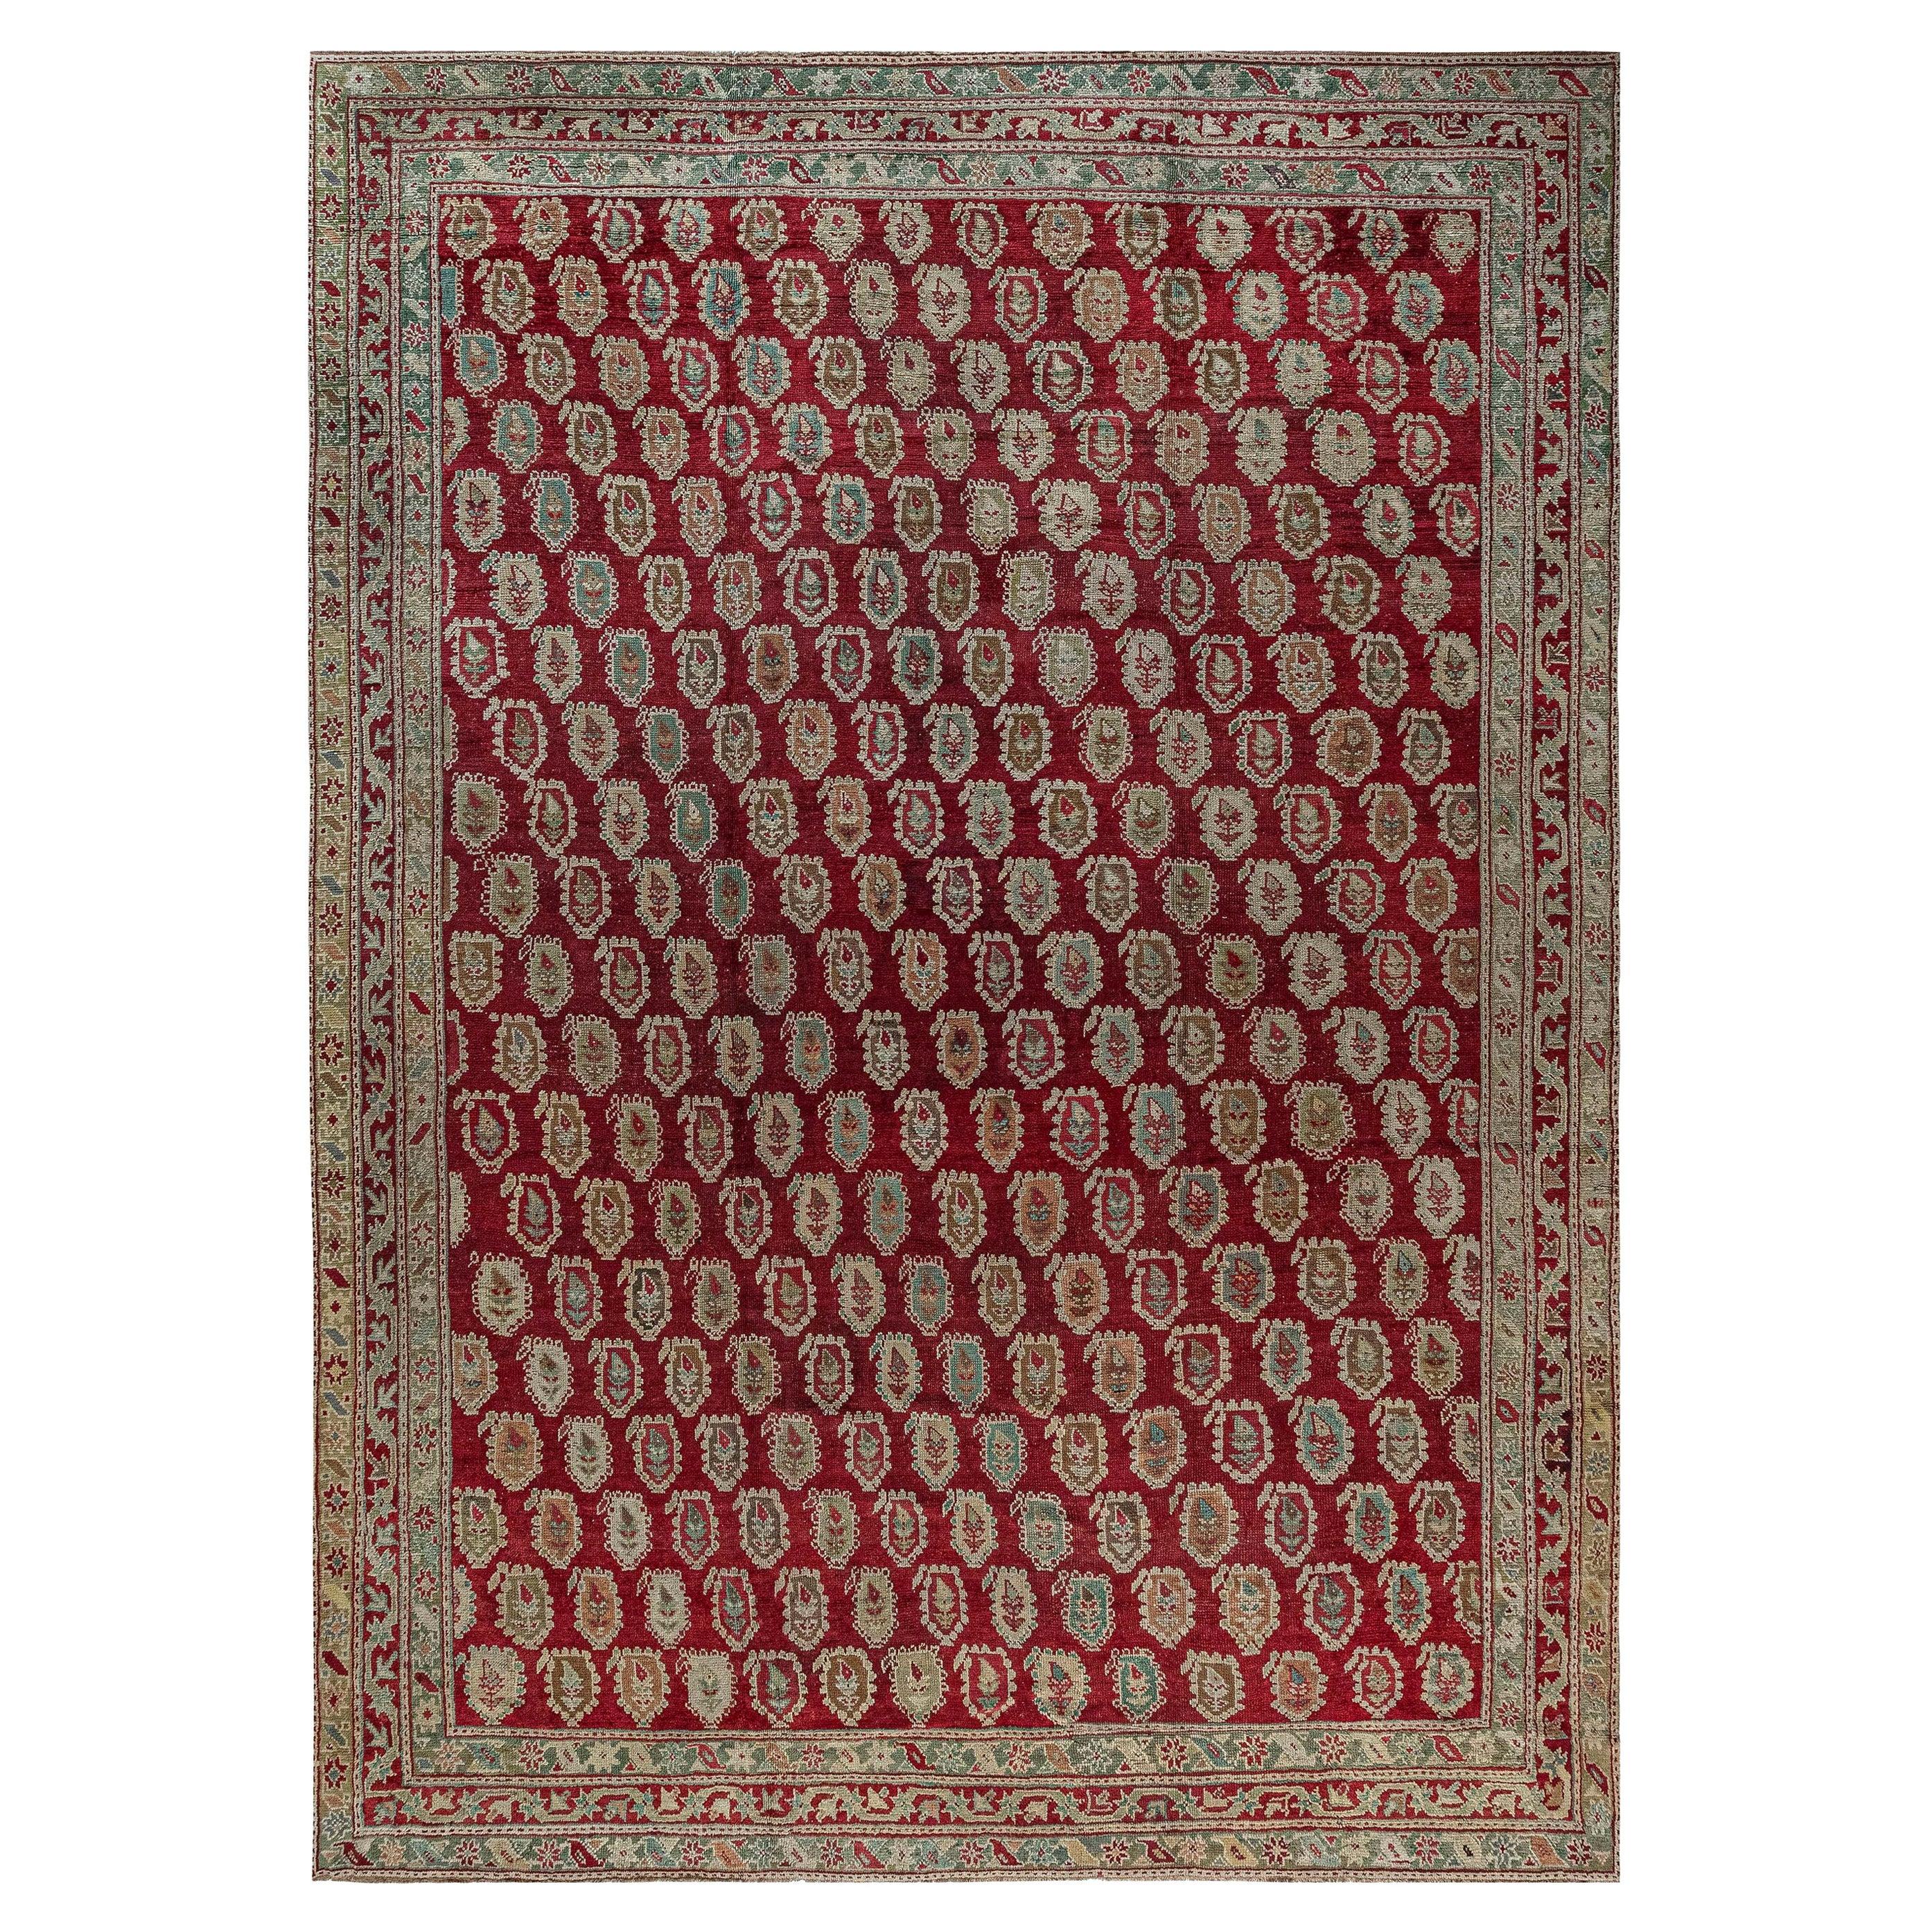 19th Century Turkish Oushak Red Wool Carpet For Sale